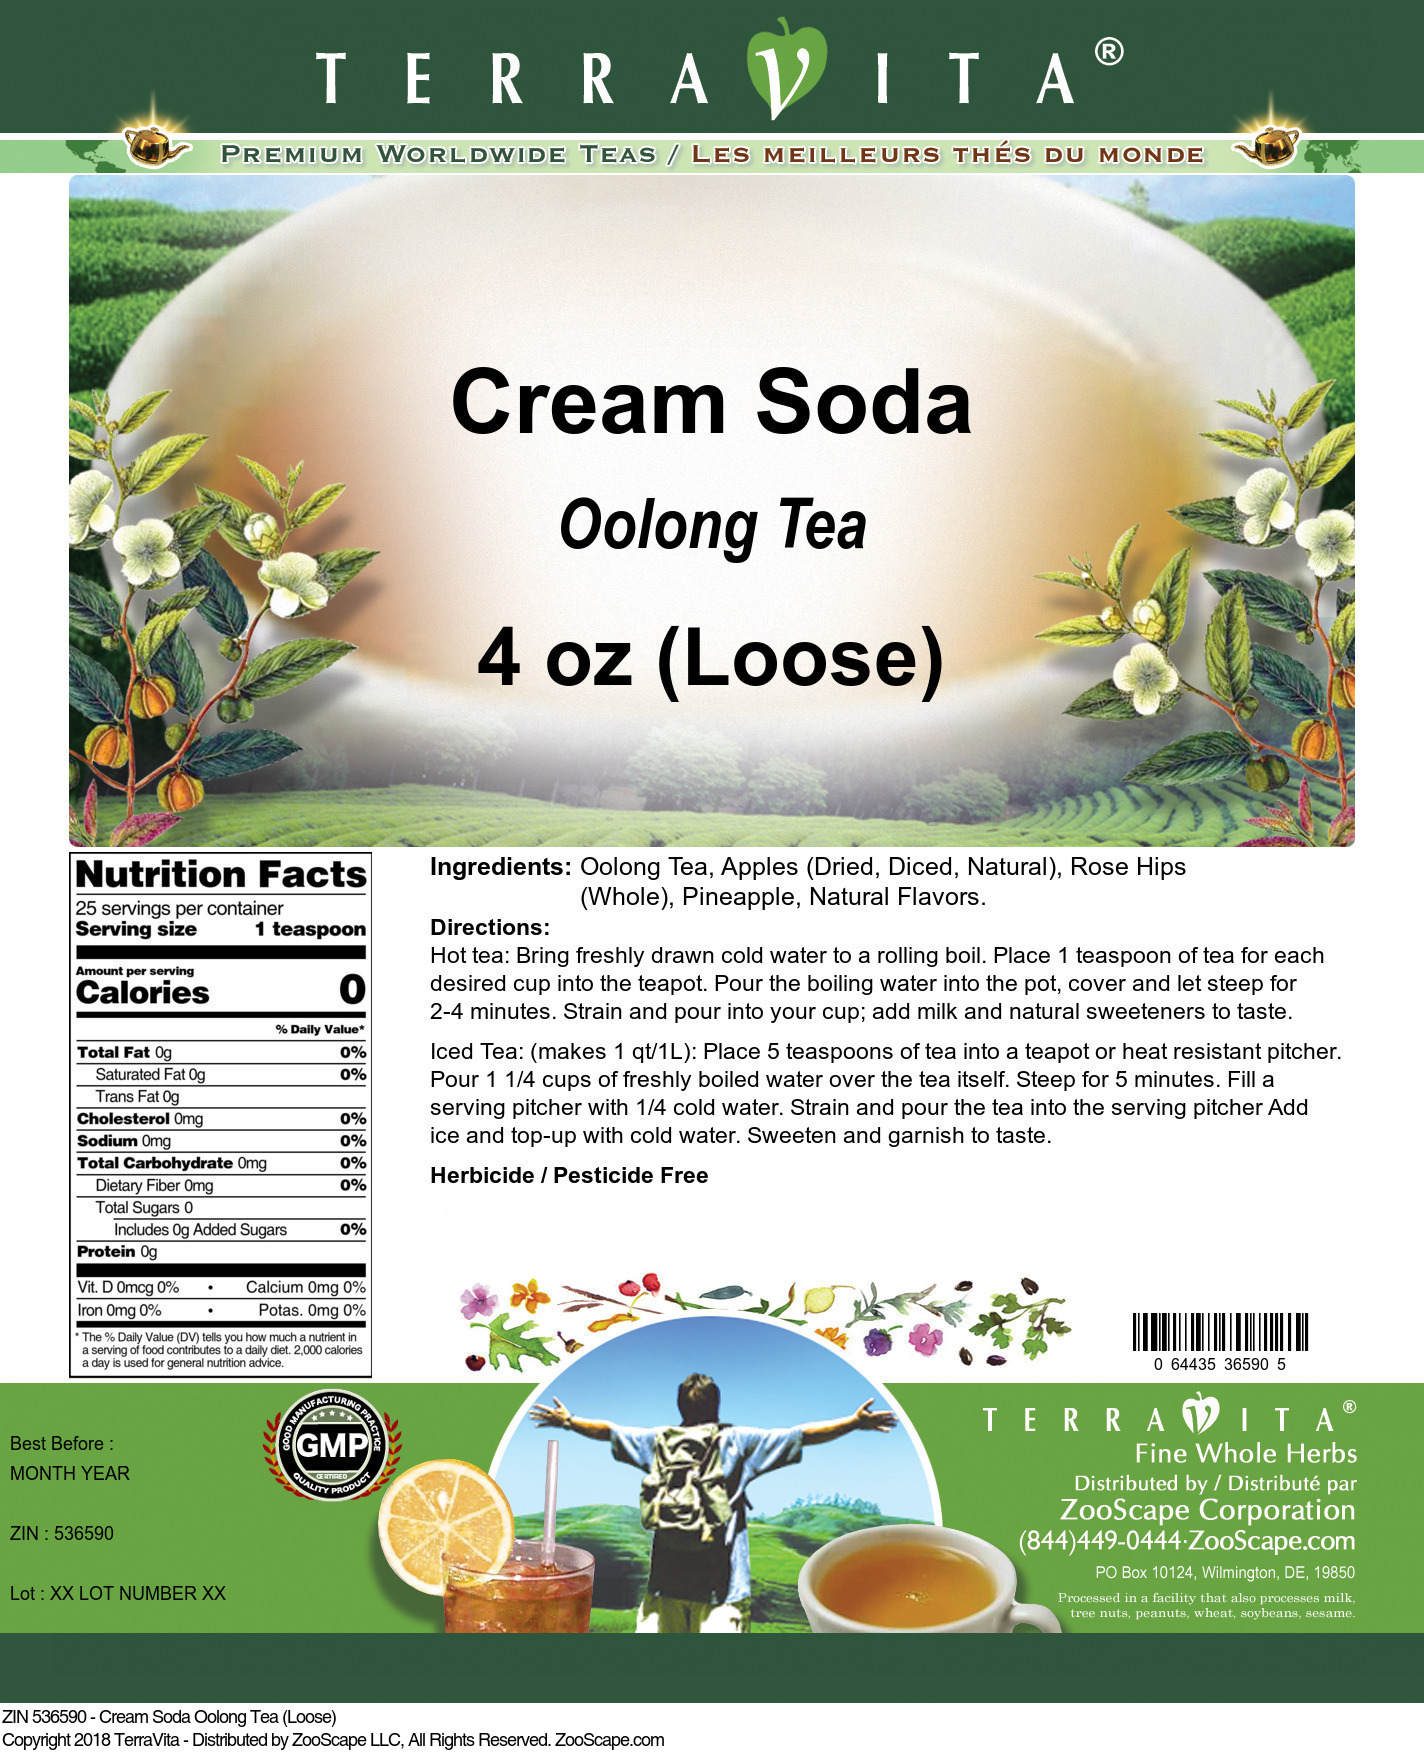 Cream Soda Oolong Tea (Loose) - Label